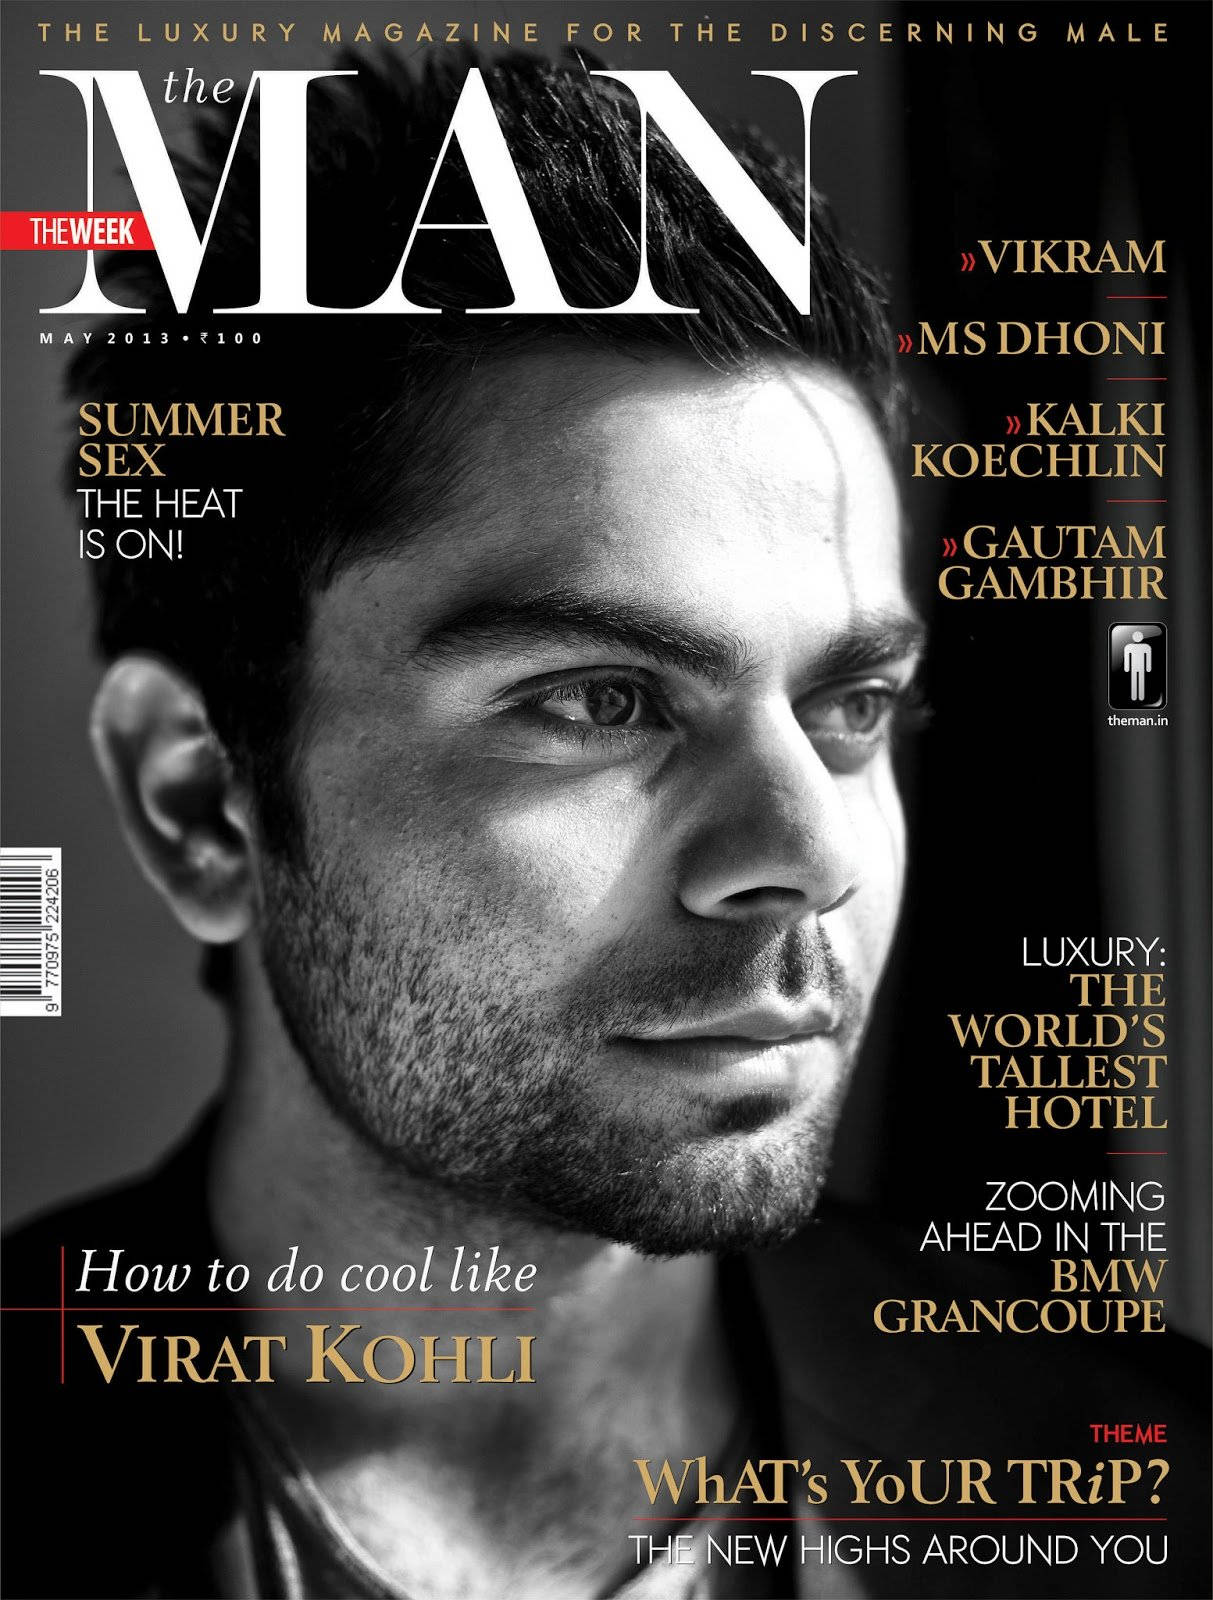 Luxury Magazine Cover For Discerning Male Wallpaper